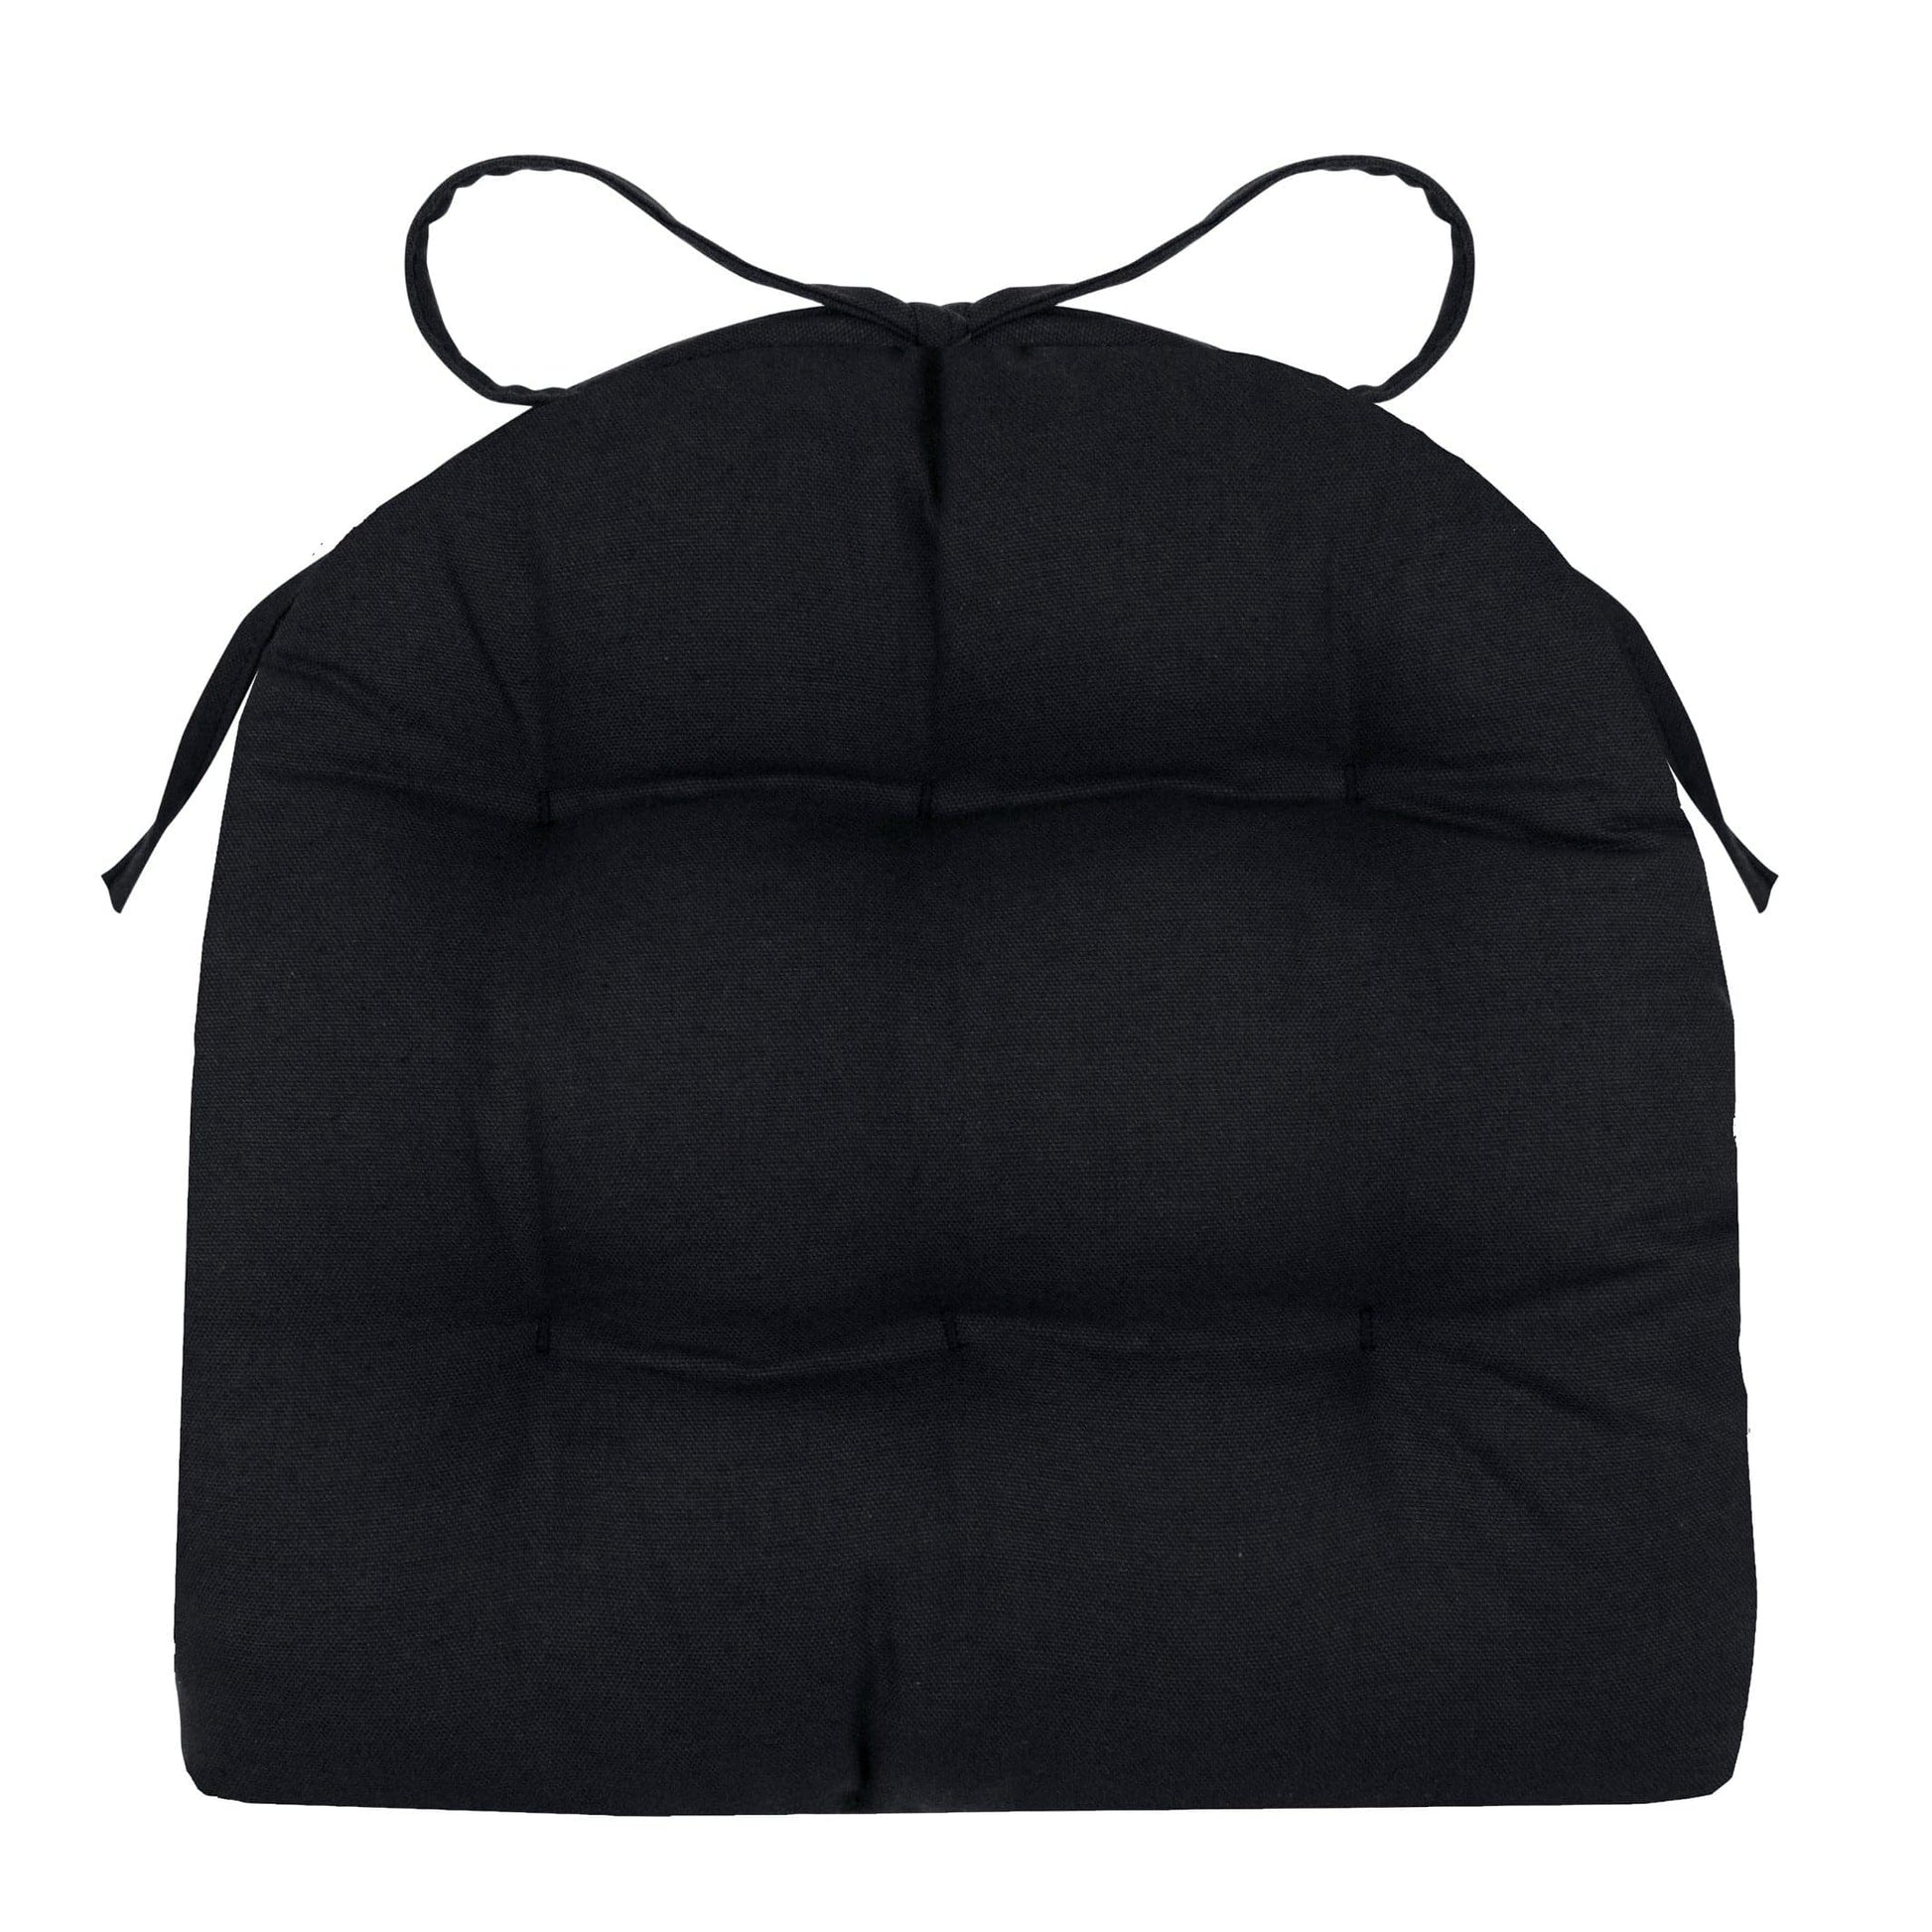 Ticking Stripe Black Industrial Chair Cushion - Reversible, Latex